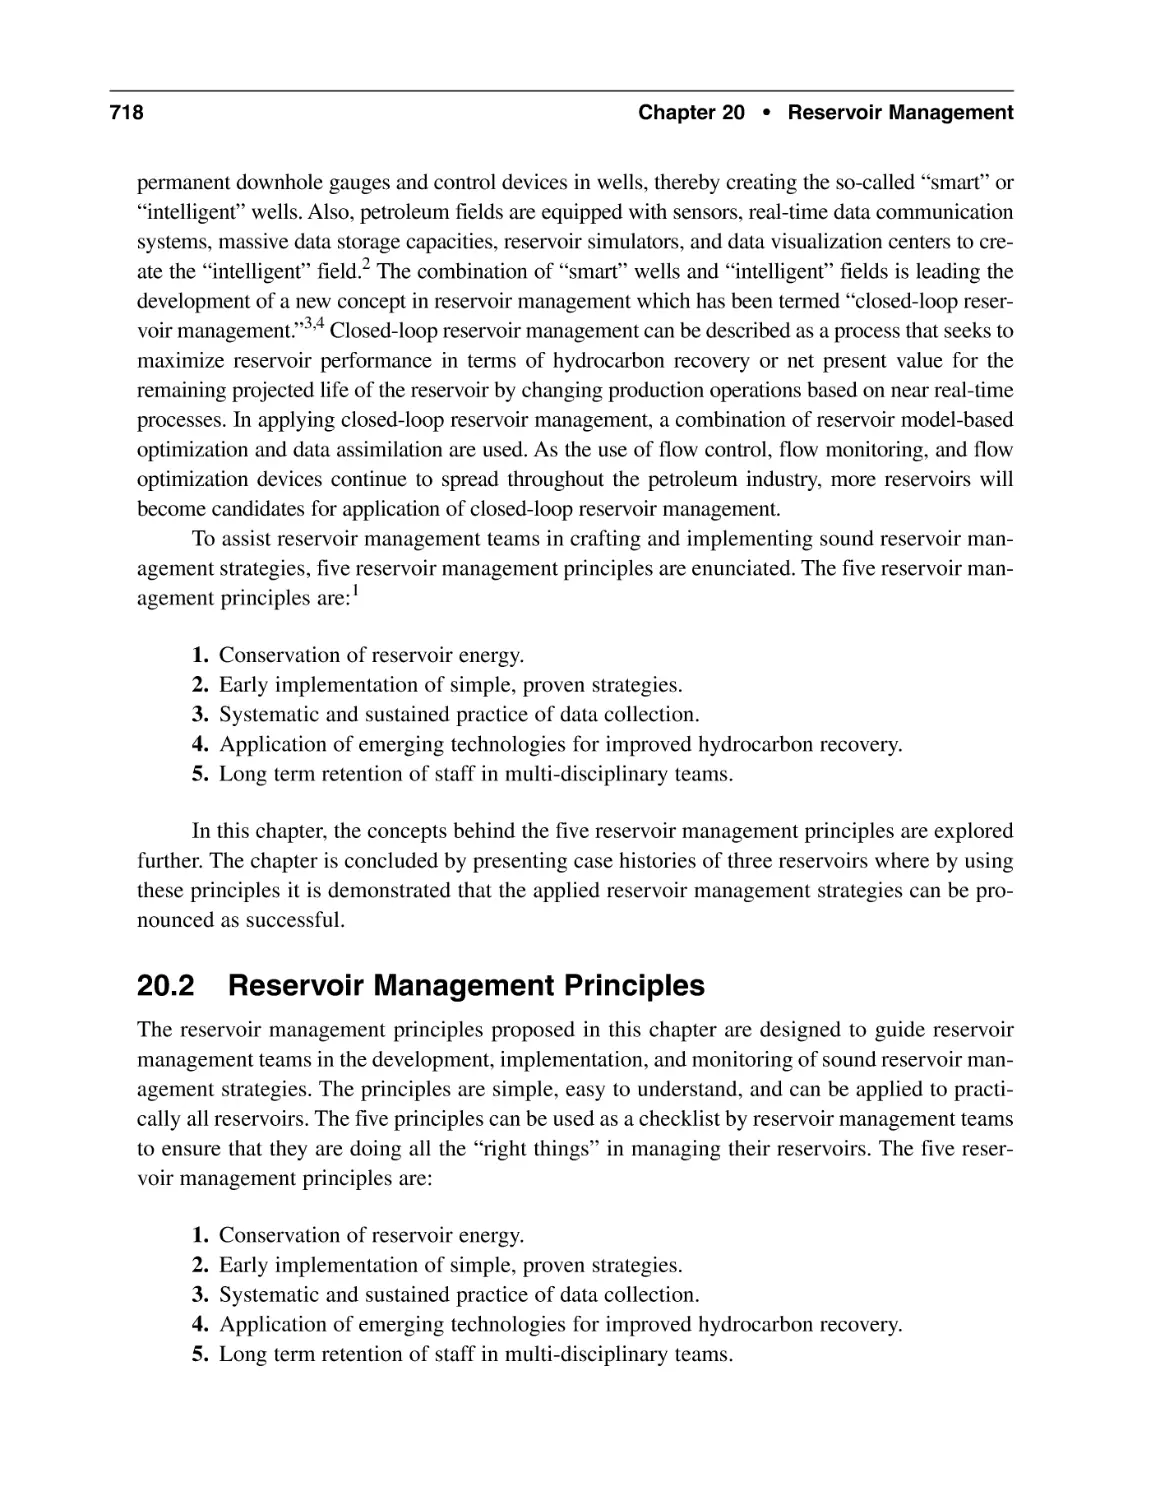 20.2 Reservoir Management Principles